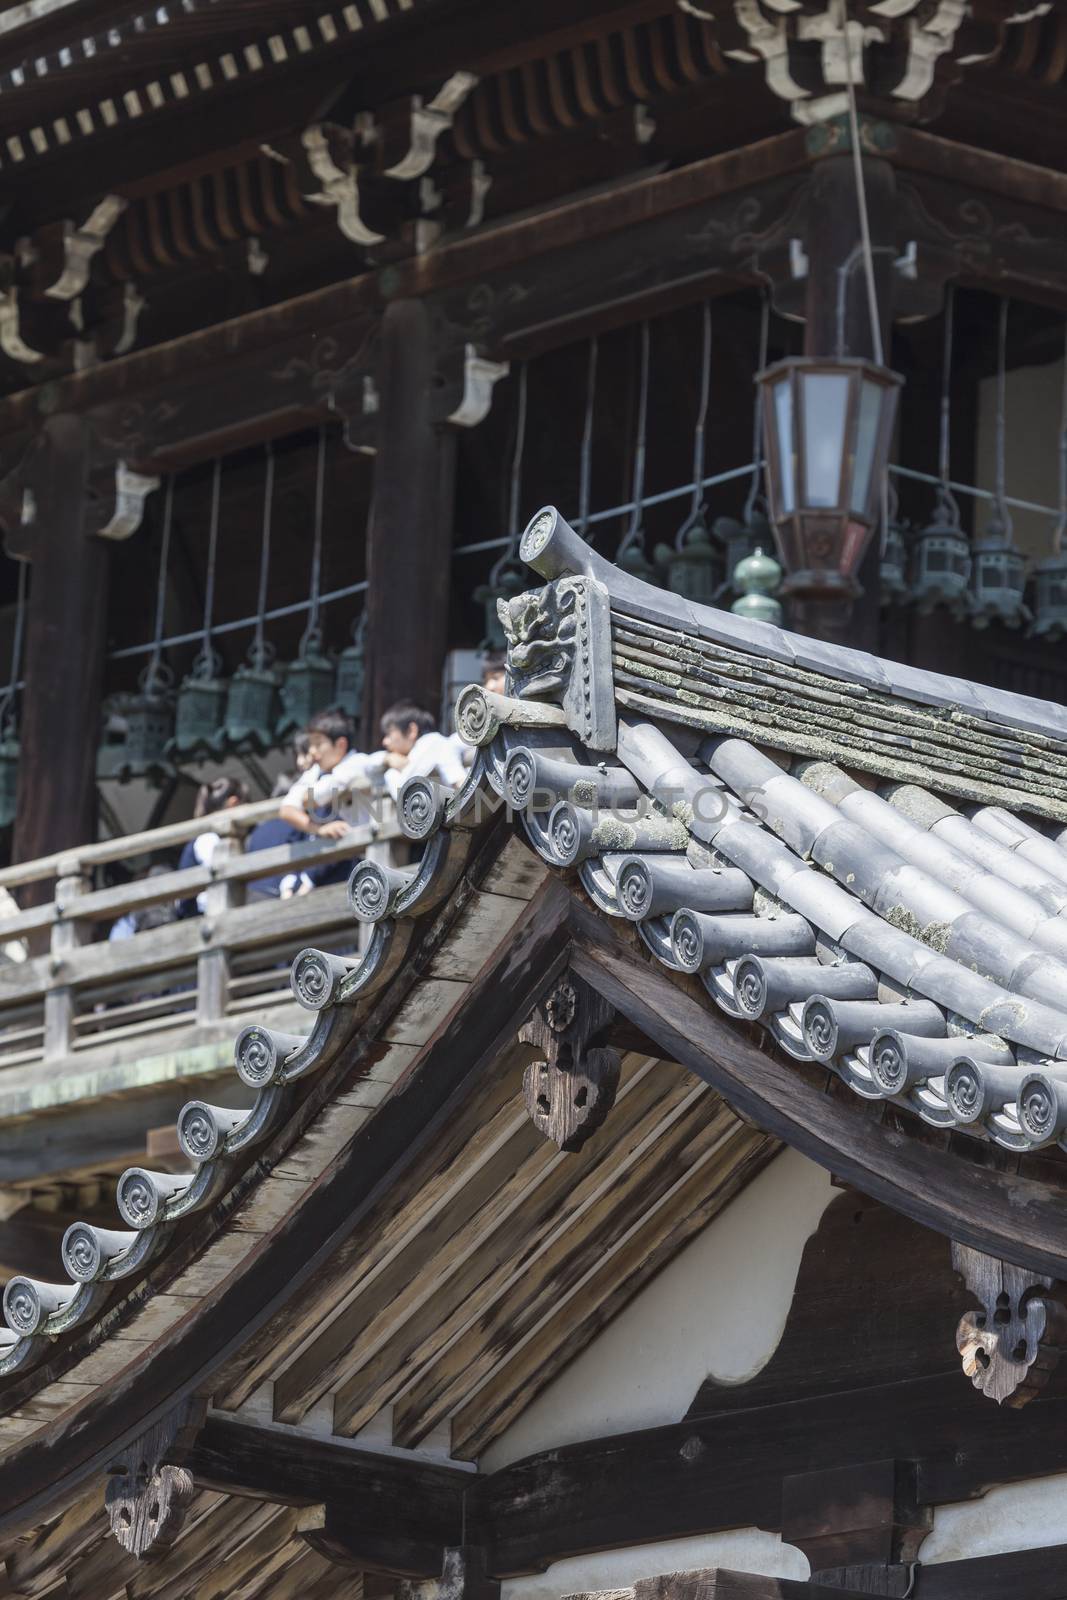 Bottom of steps entering Nigatsu-do Hall on the Todai-ji temple  by mariusz_prusaczyk